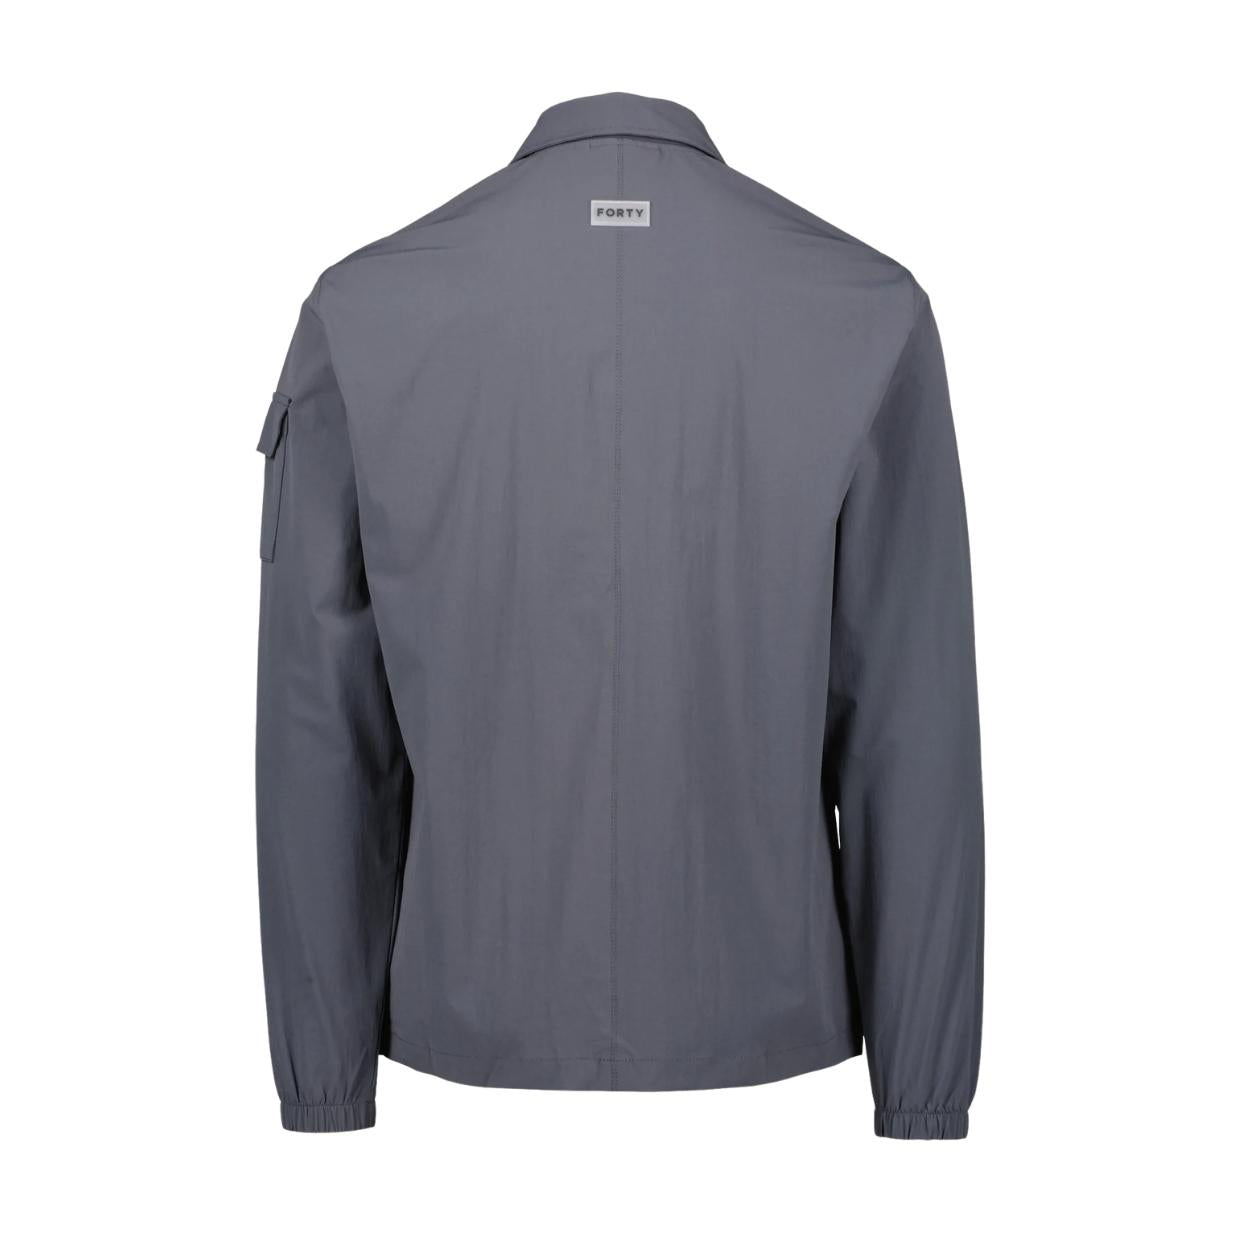 Forty Callan Grey Shirt Jacket